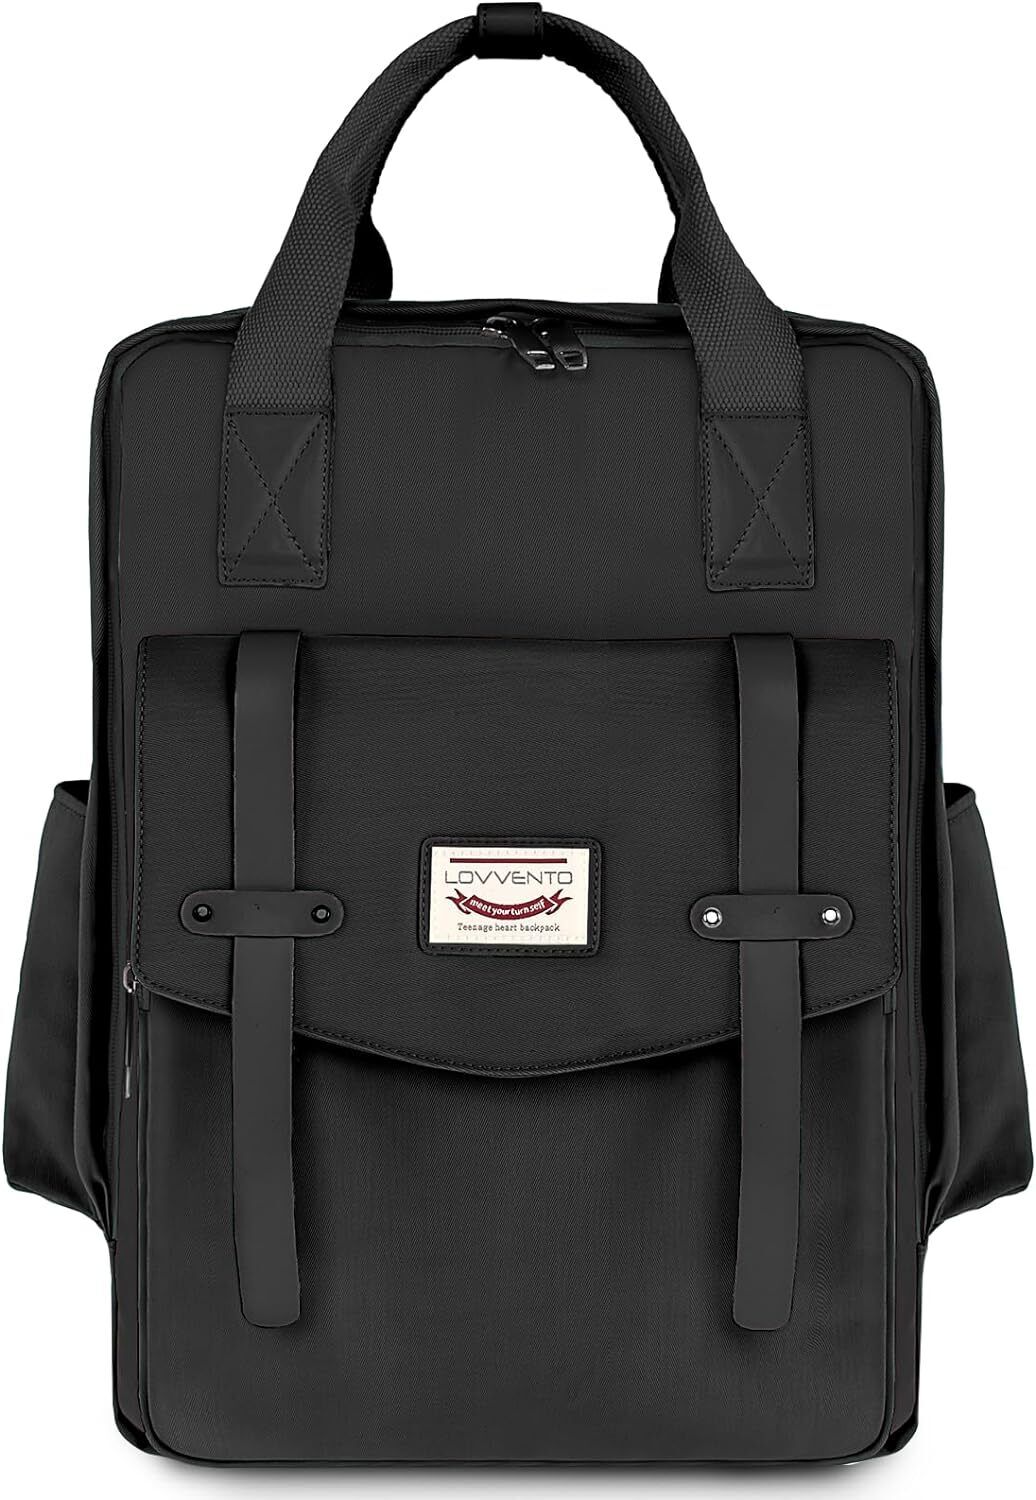 Lovvento 15.6 inch Laptop Japanese Backpack Travel Bag College 1-black 